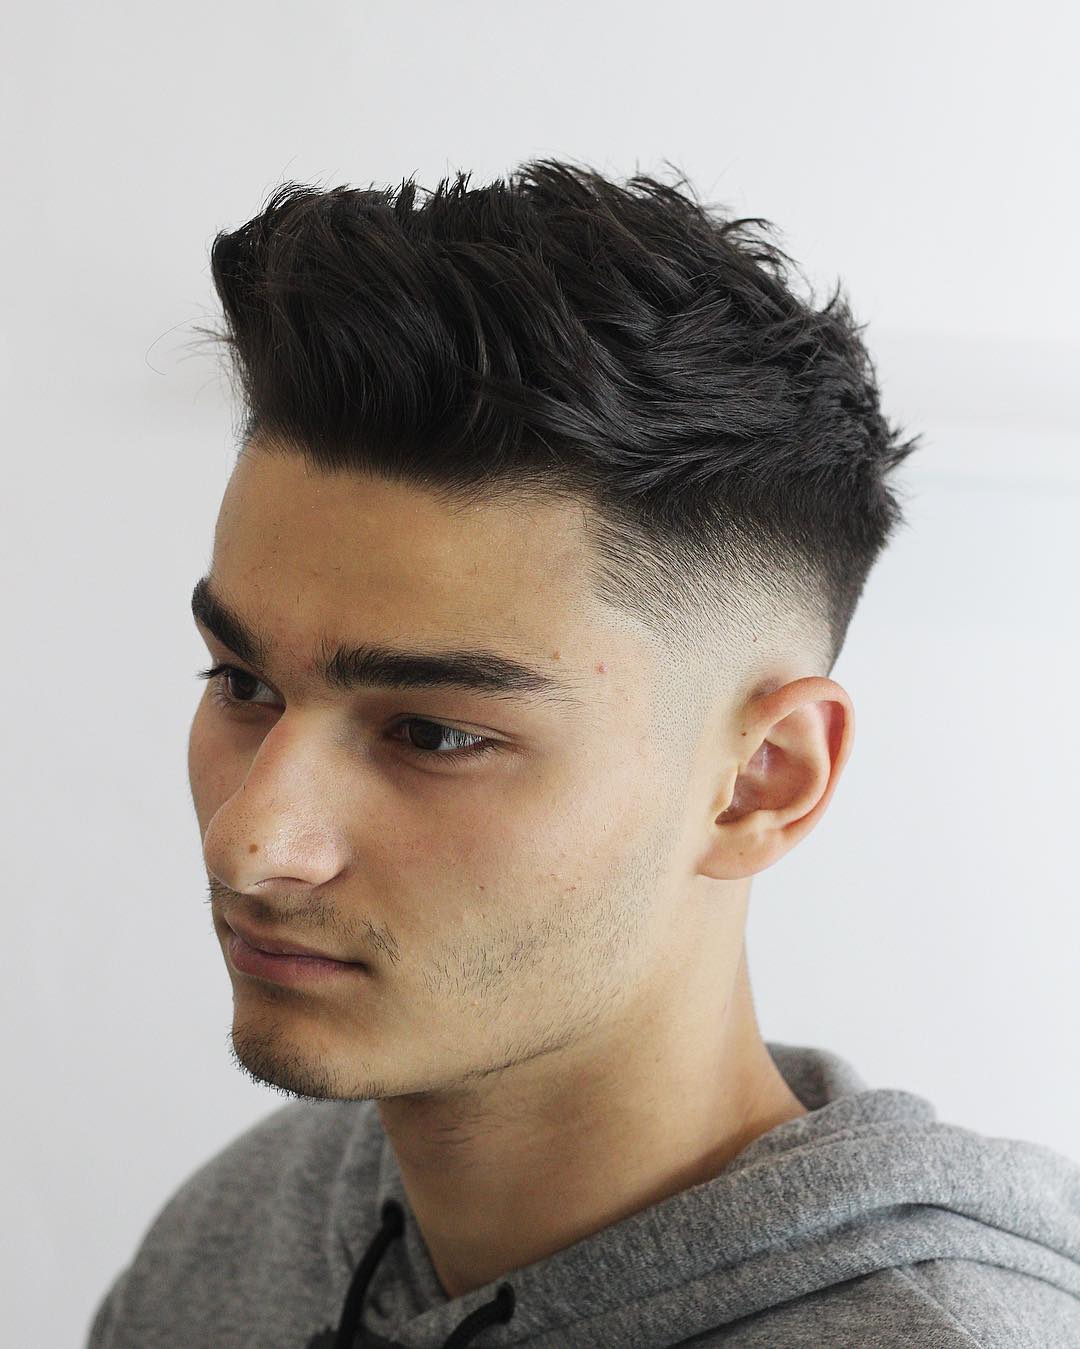 raduvitca mid fade medium textured haircut for guys